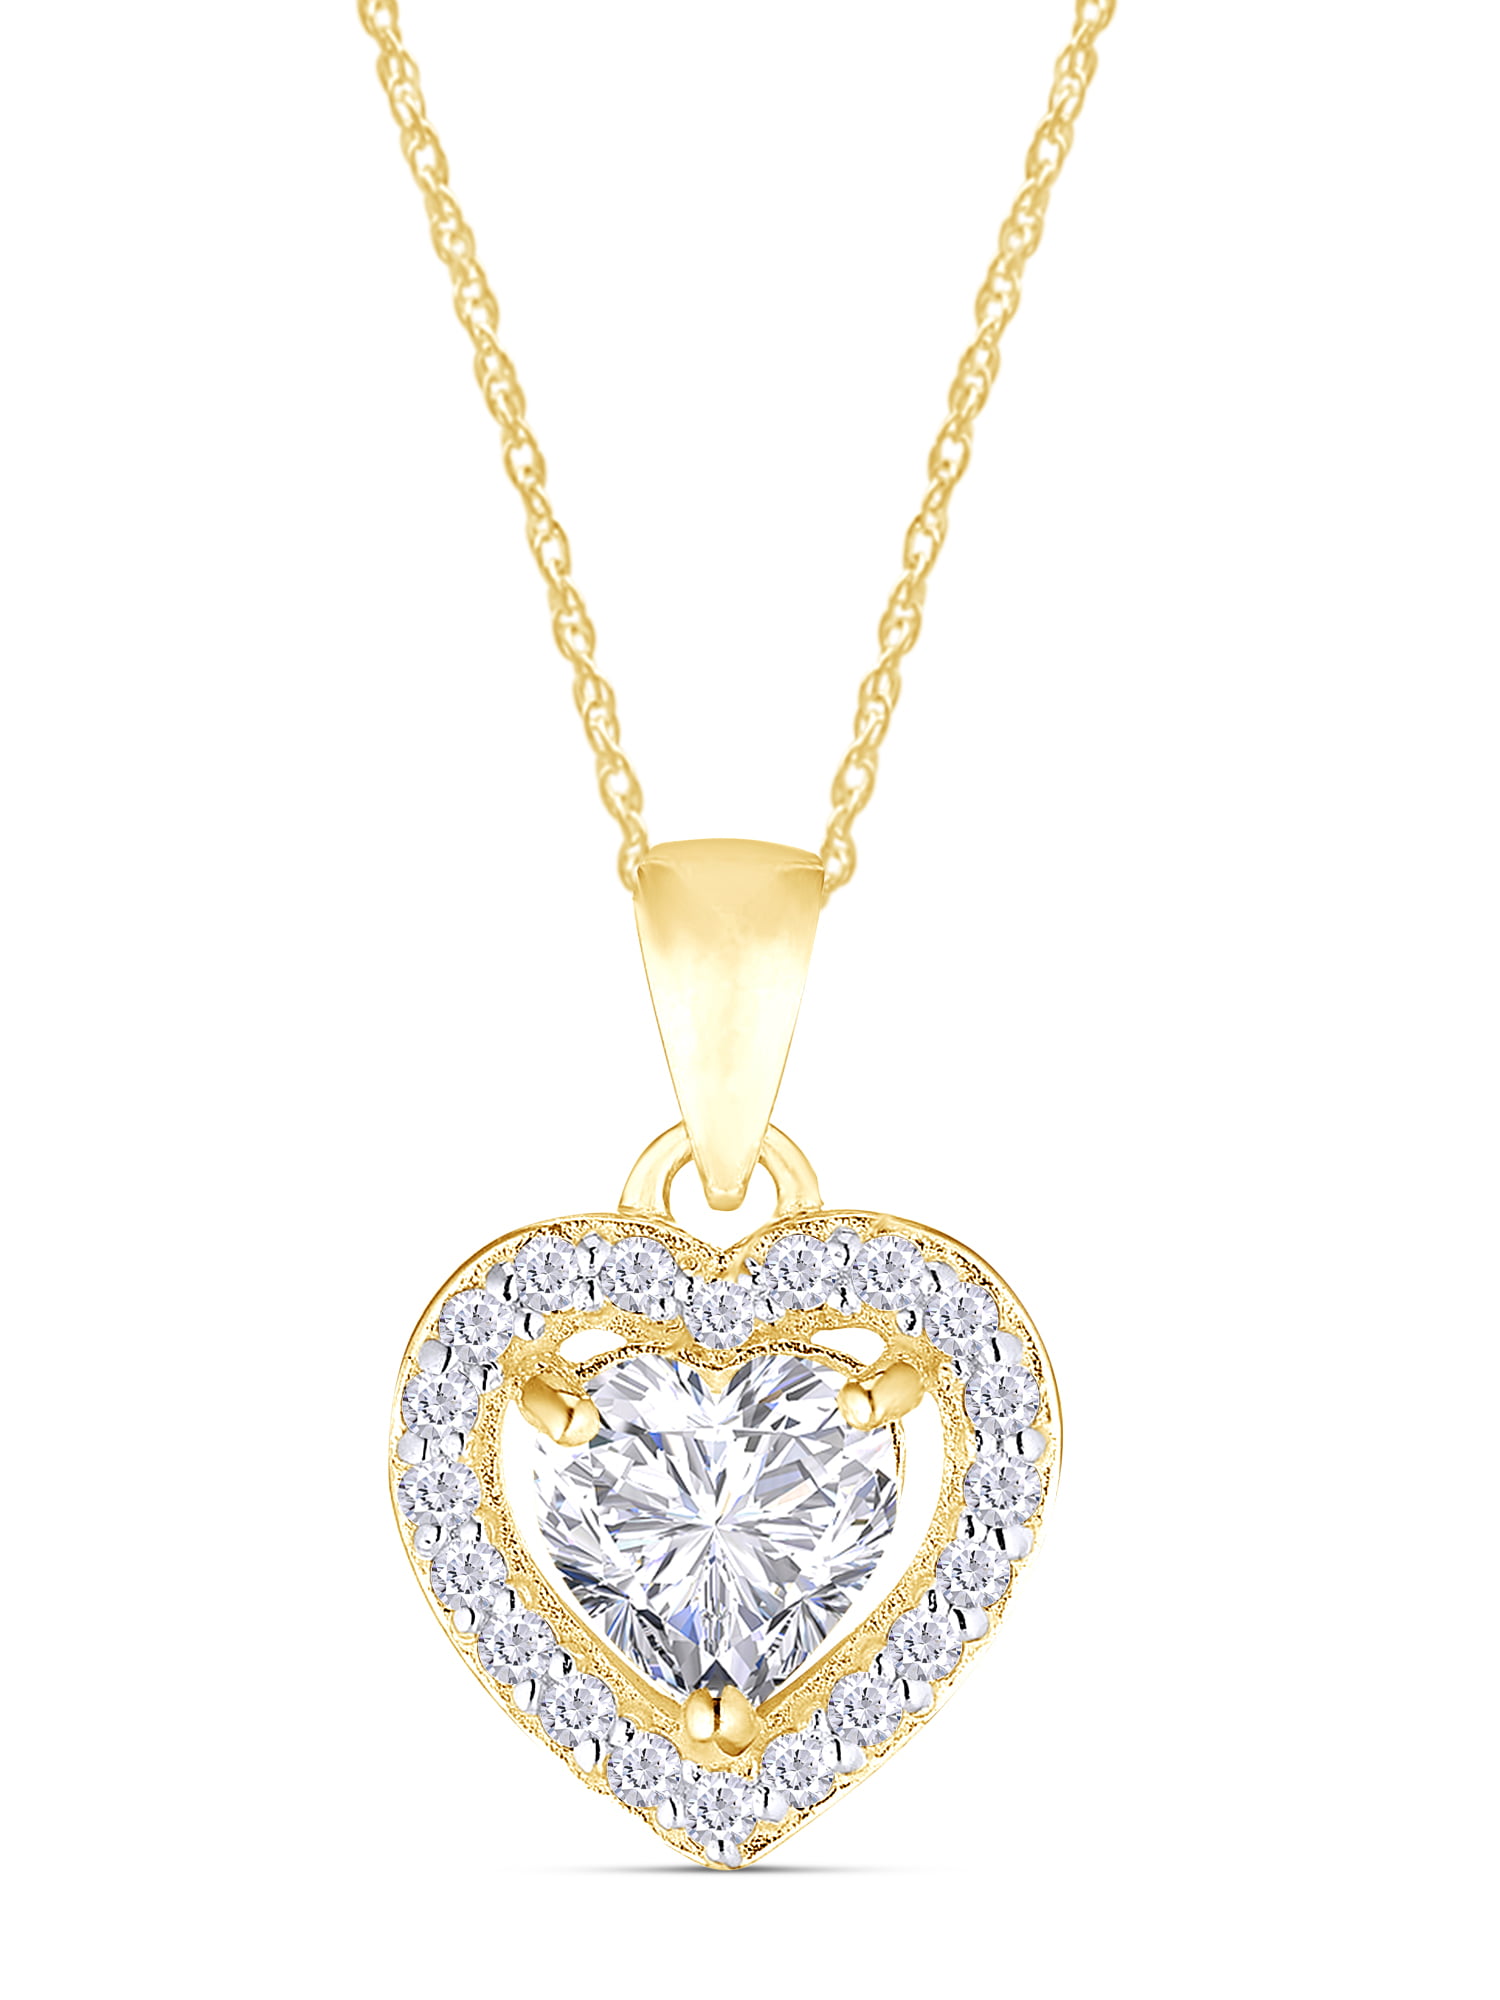 Wishrocks White CZ Dog Heart Pendant Necklace in 14K Gold Over Sterling Silver